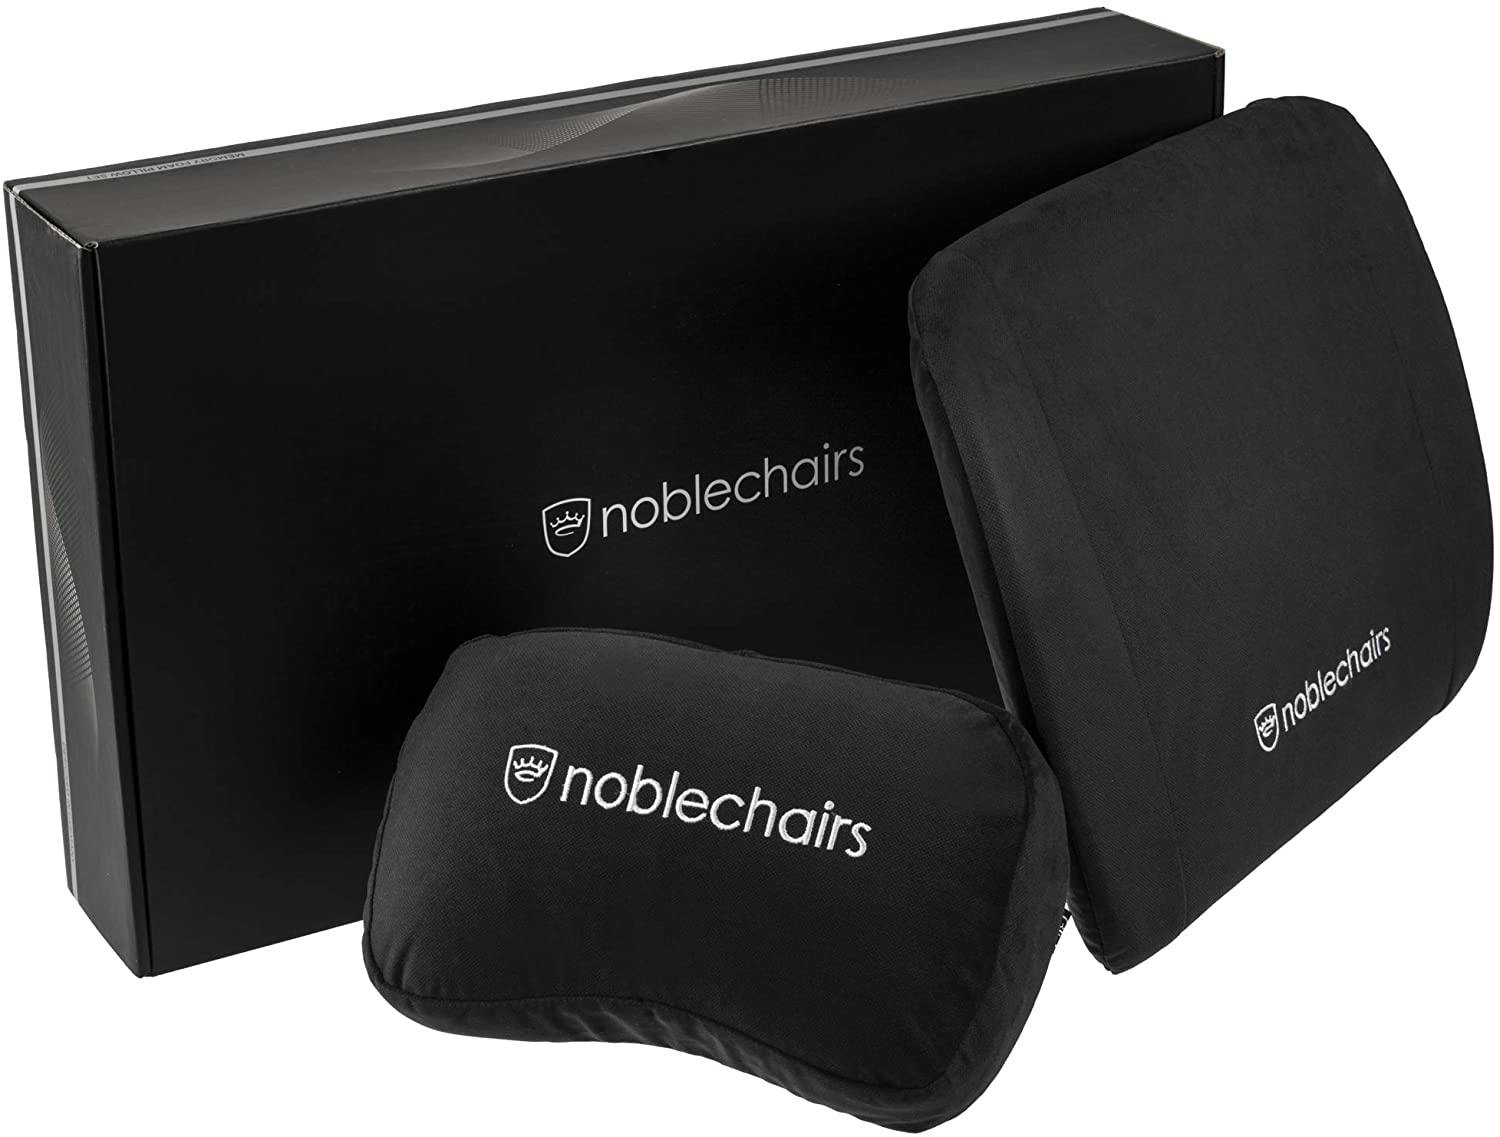 Noblechairs - Memory Foam Cushion Set